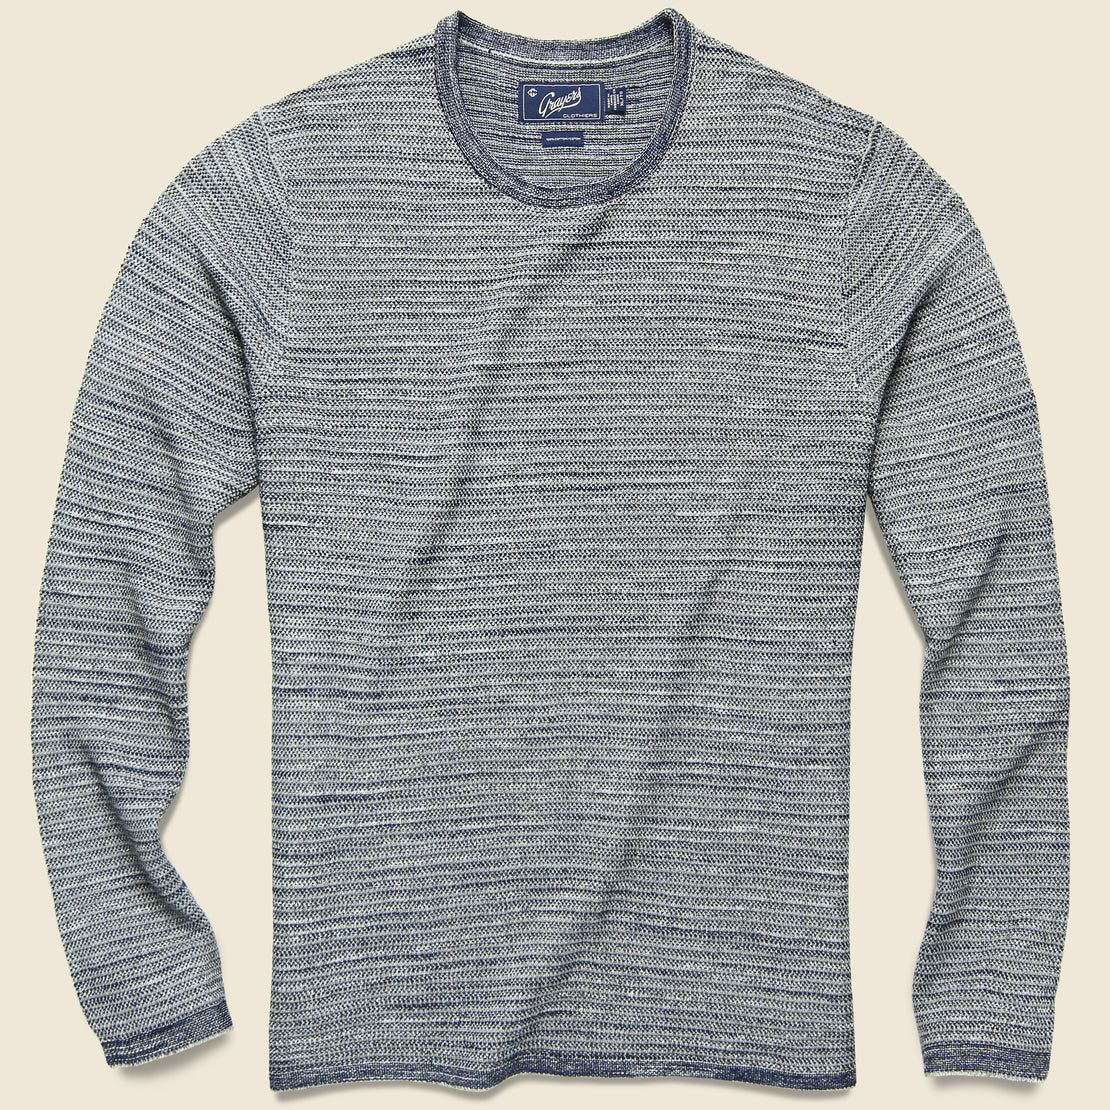 Grayers Birdseye Jacquard Crewneck Sweater - Grey/Navy